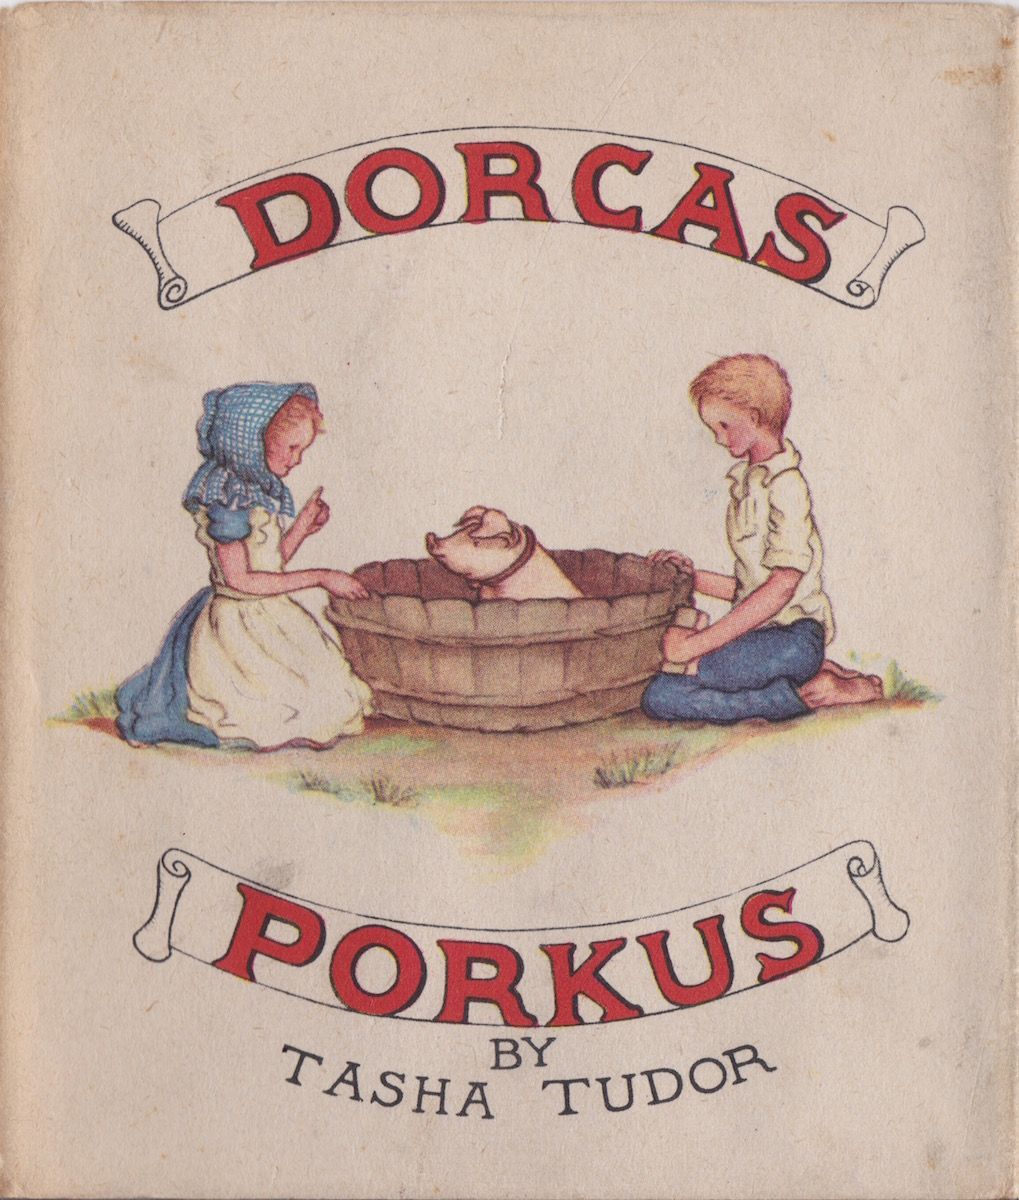 dorcus-porkus-covercopy